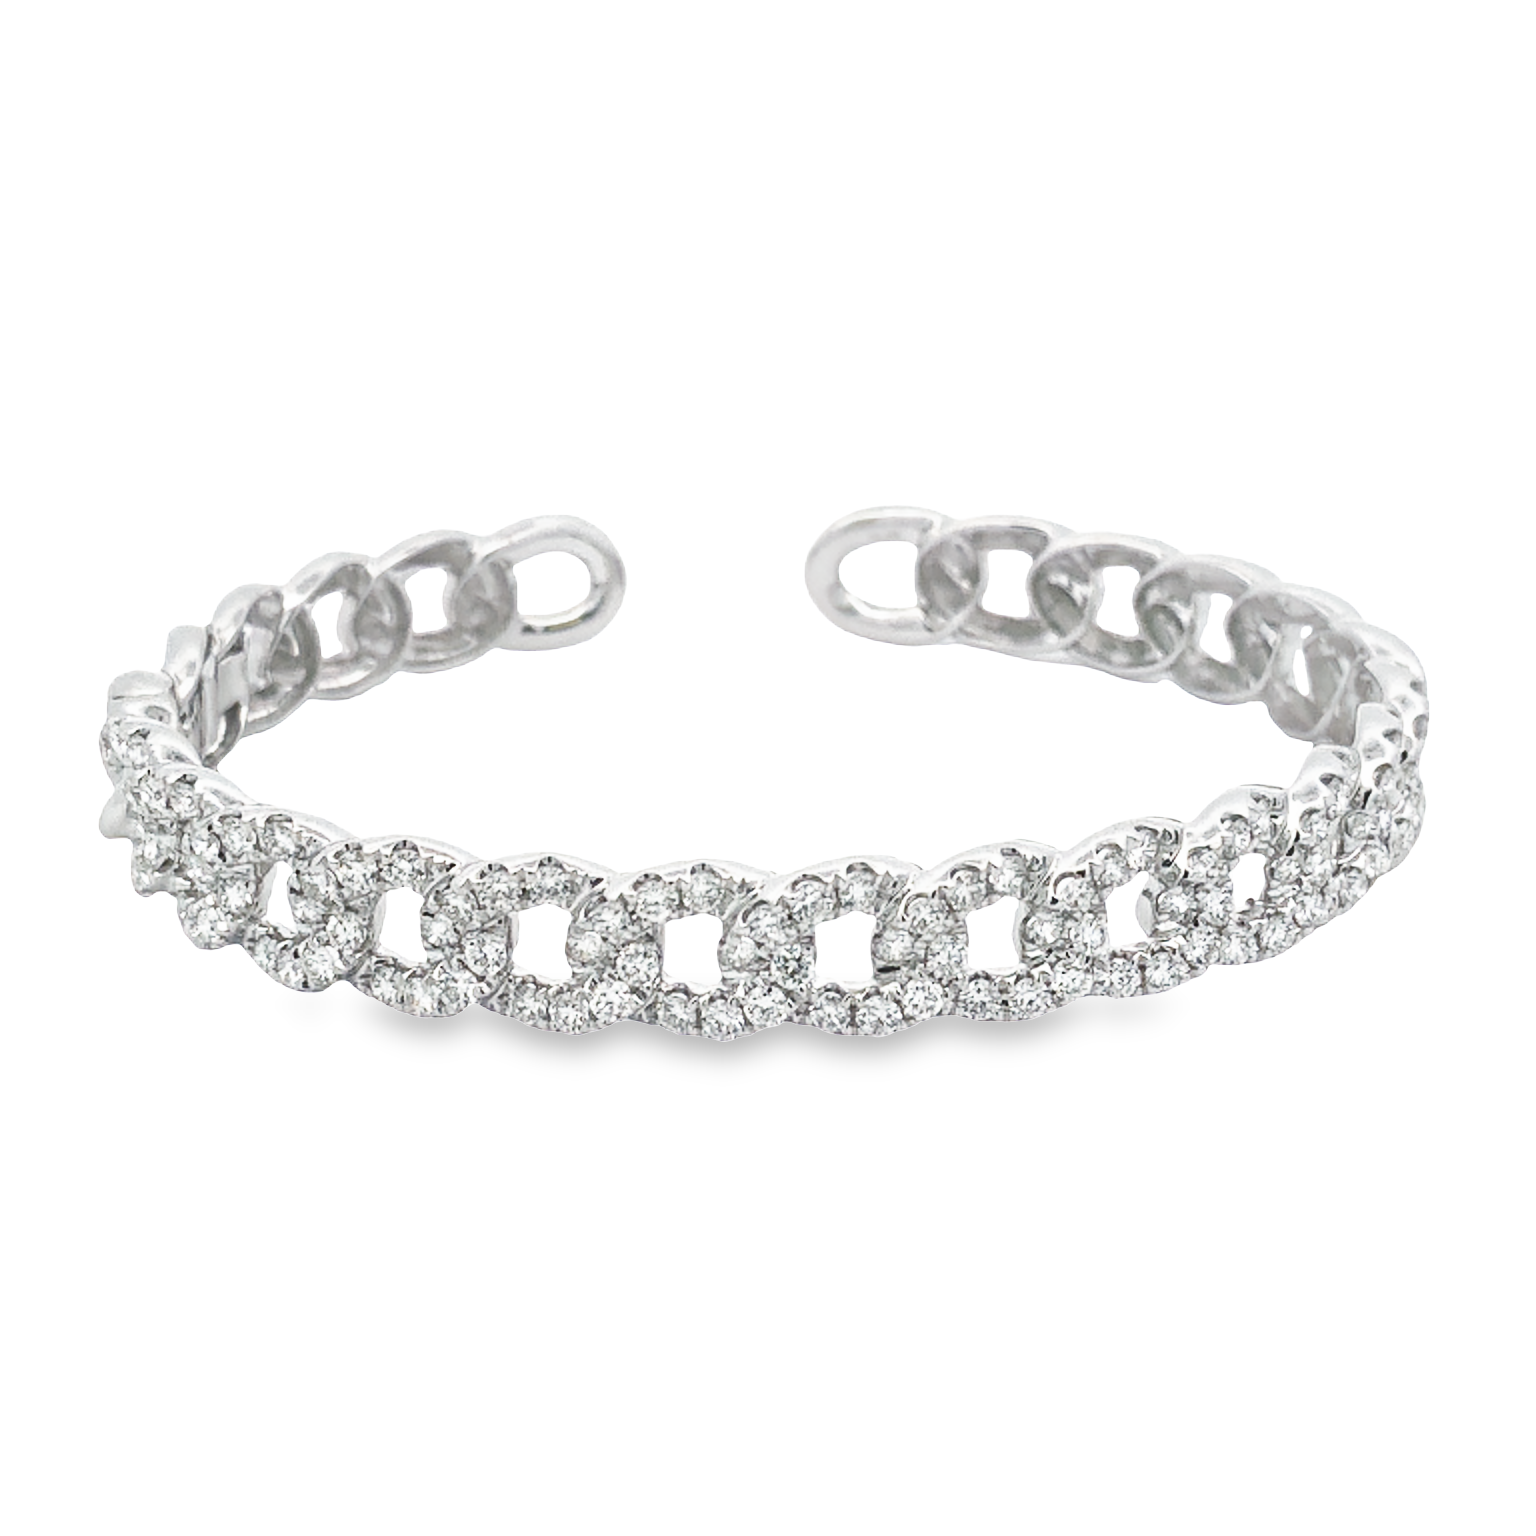 18K White Gold Chain Style Diamond Bangle Bracelet